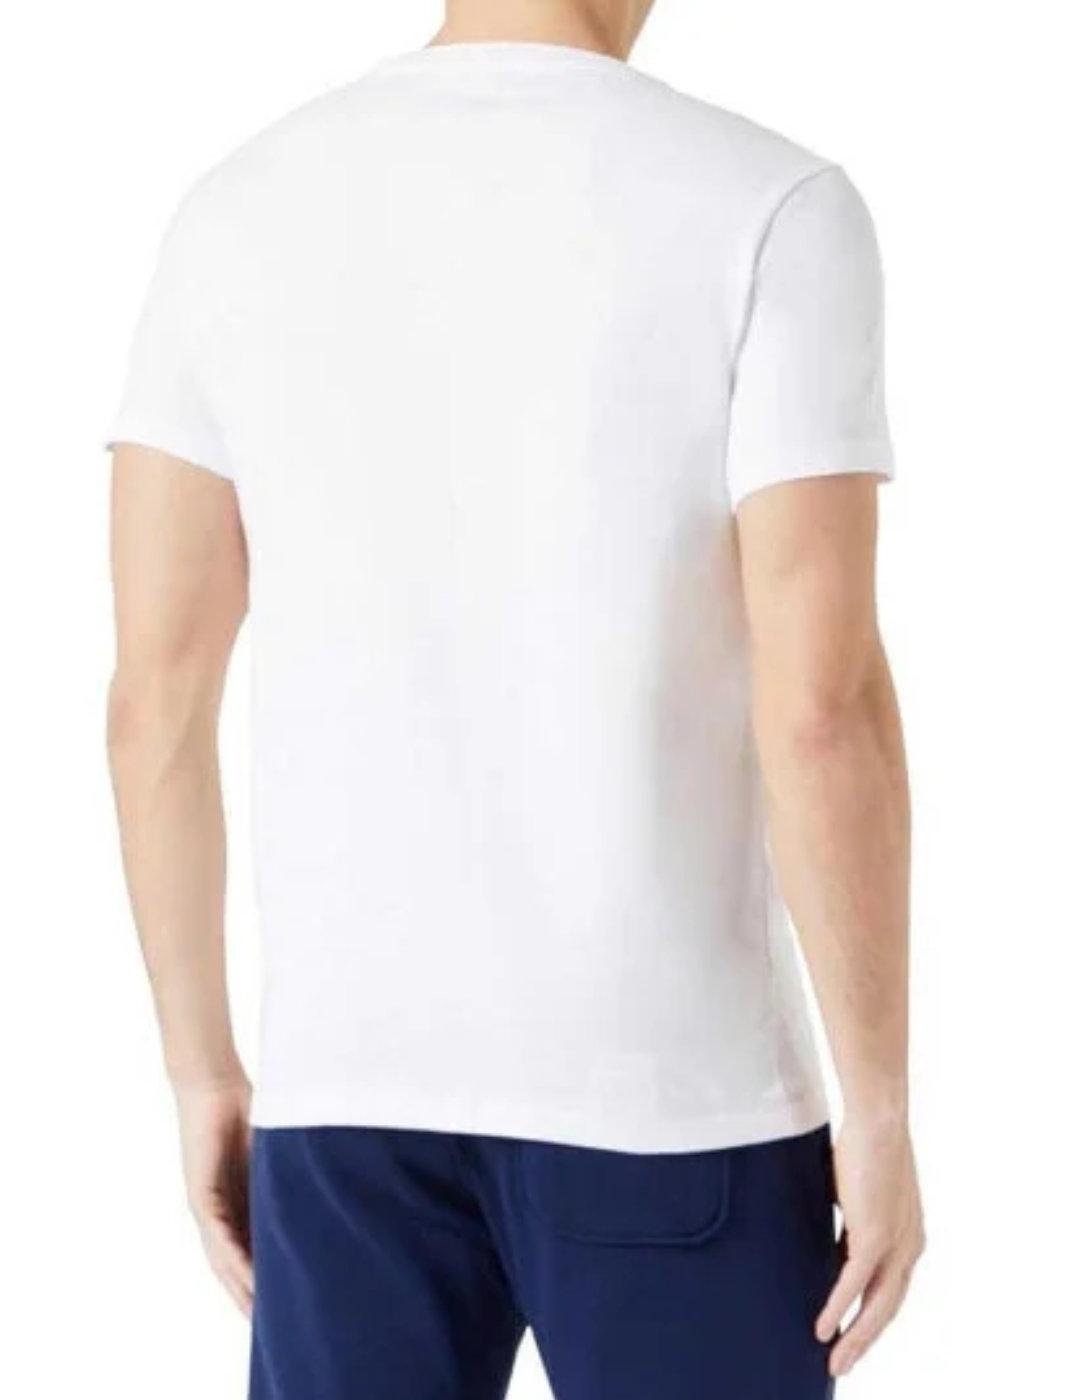 Camiseta Replay blanca calavera manga corta para hombre